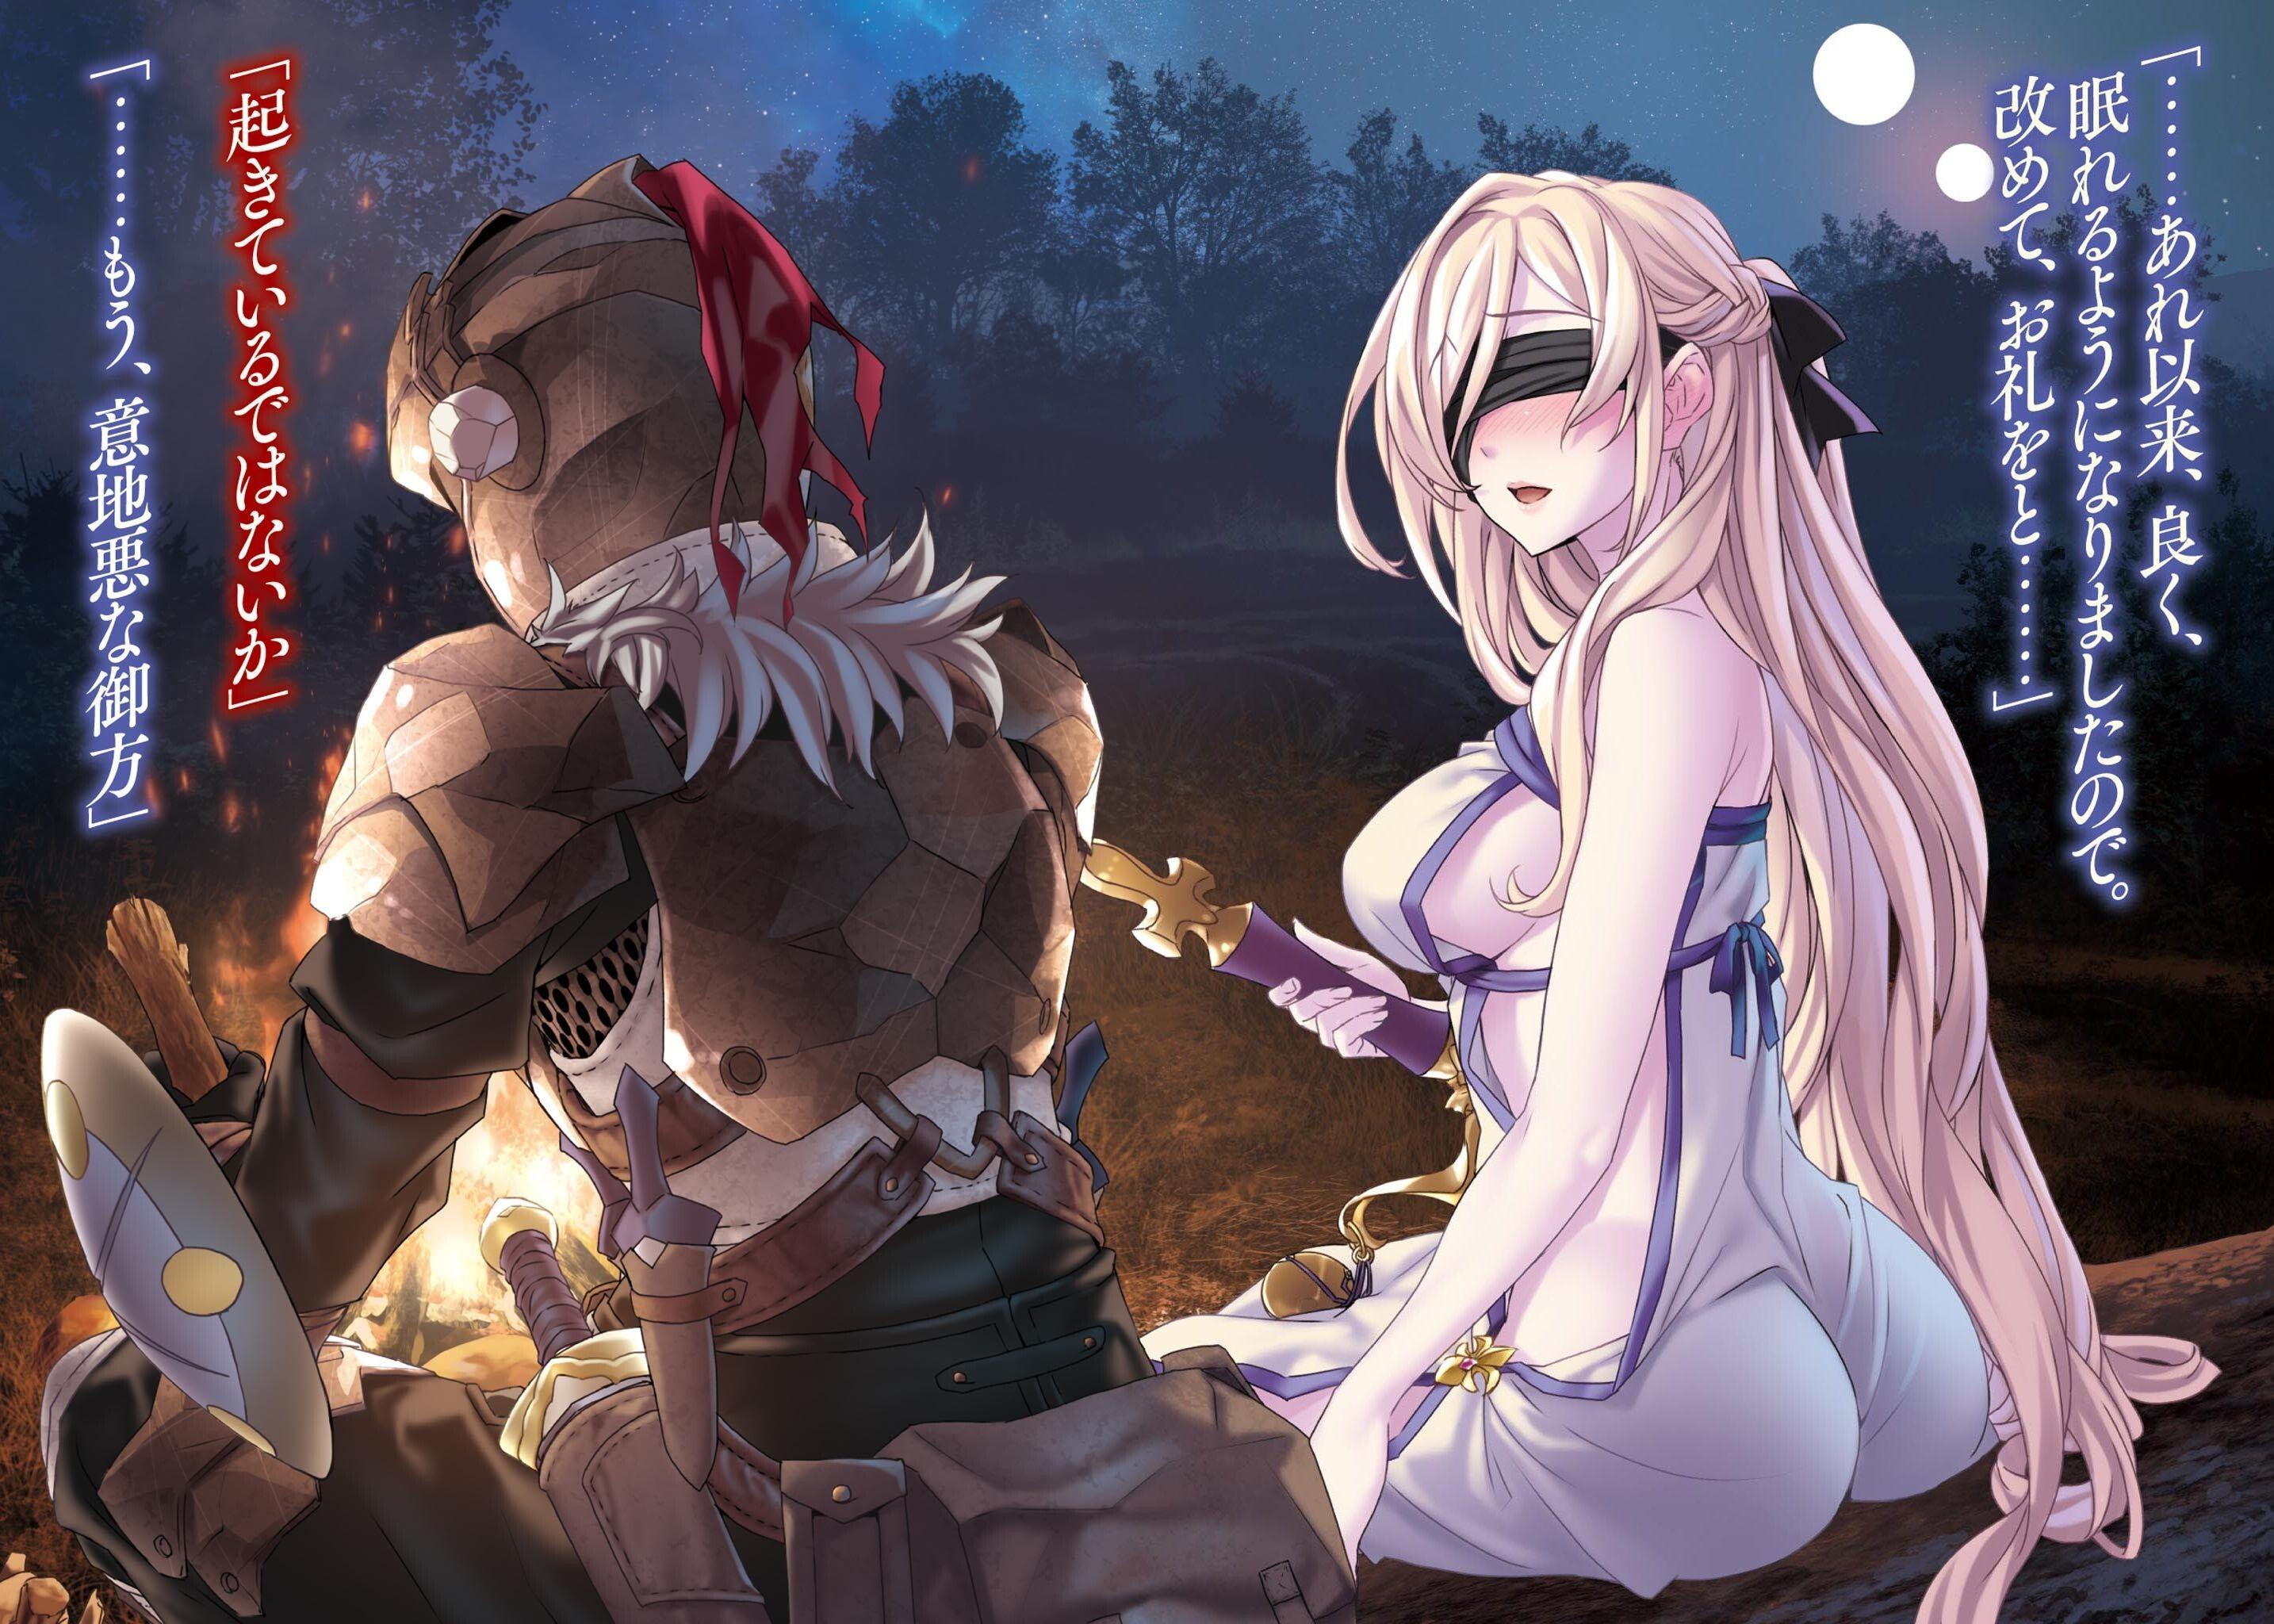 Sword Maiden Slayer Anime Image Board